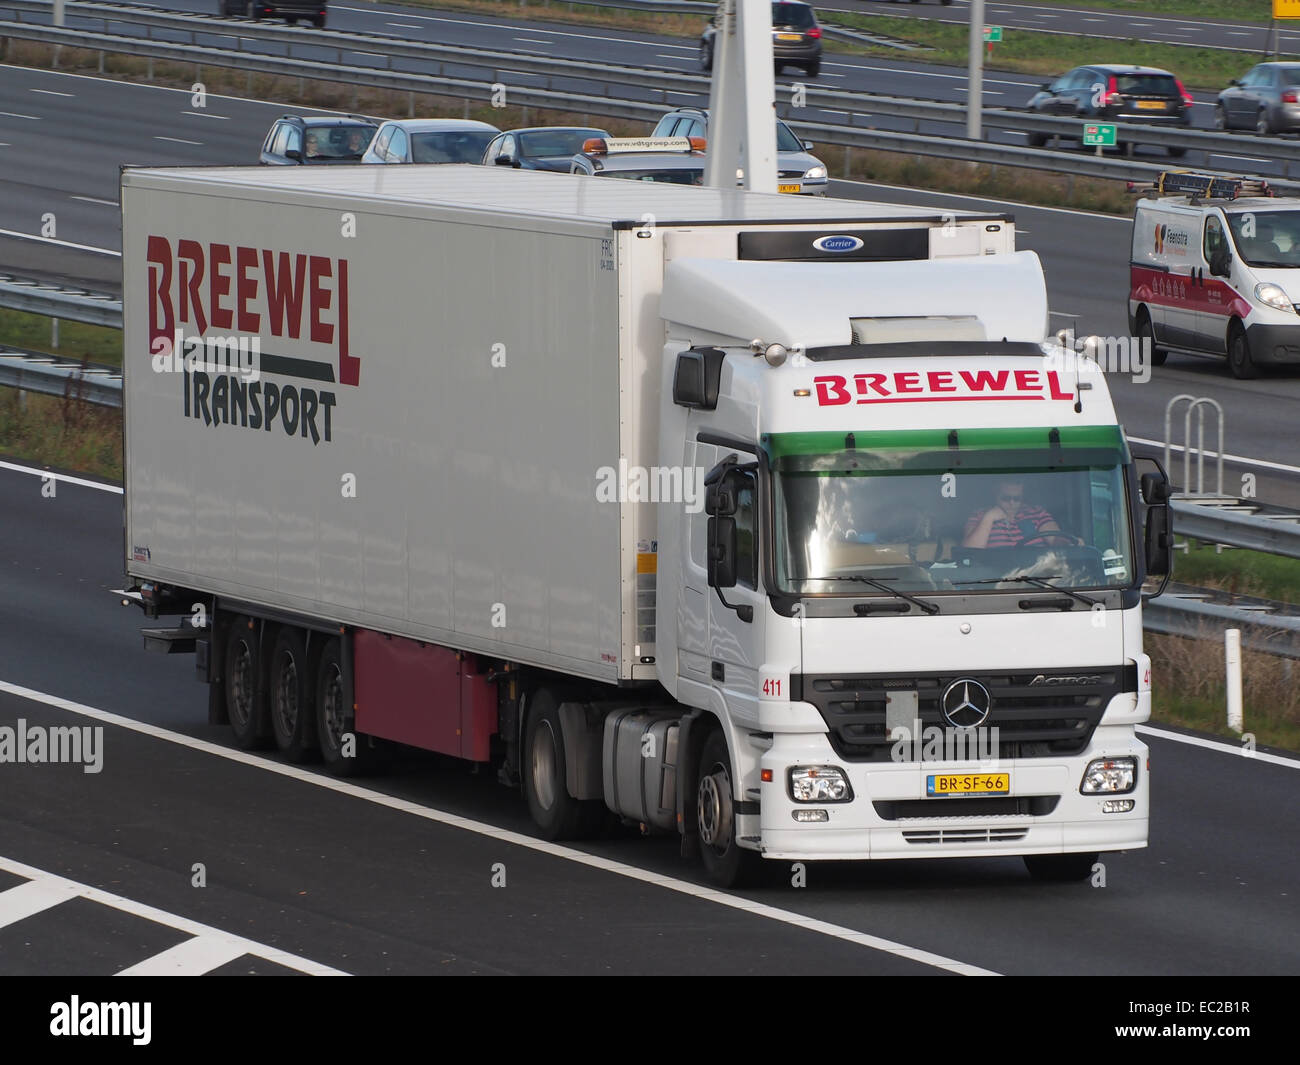 MERCEDES-BENZ ACTROS, Transporte Breewel Foto de stock